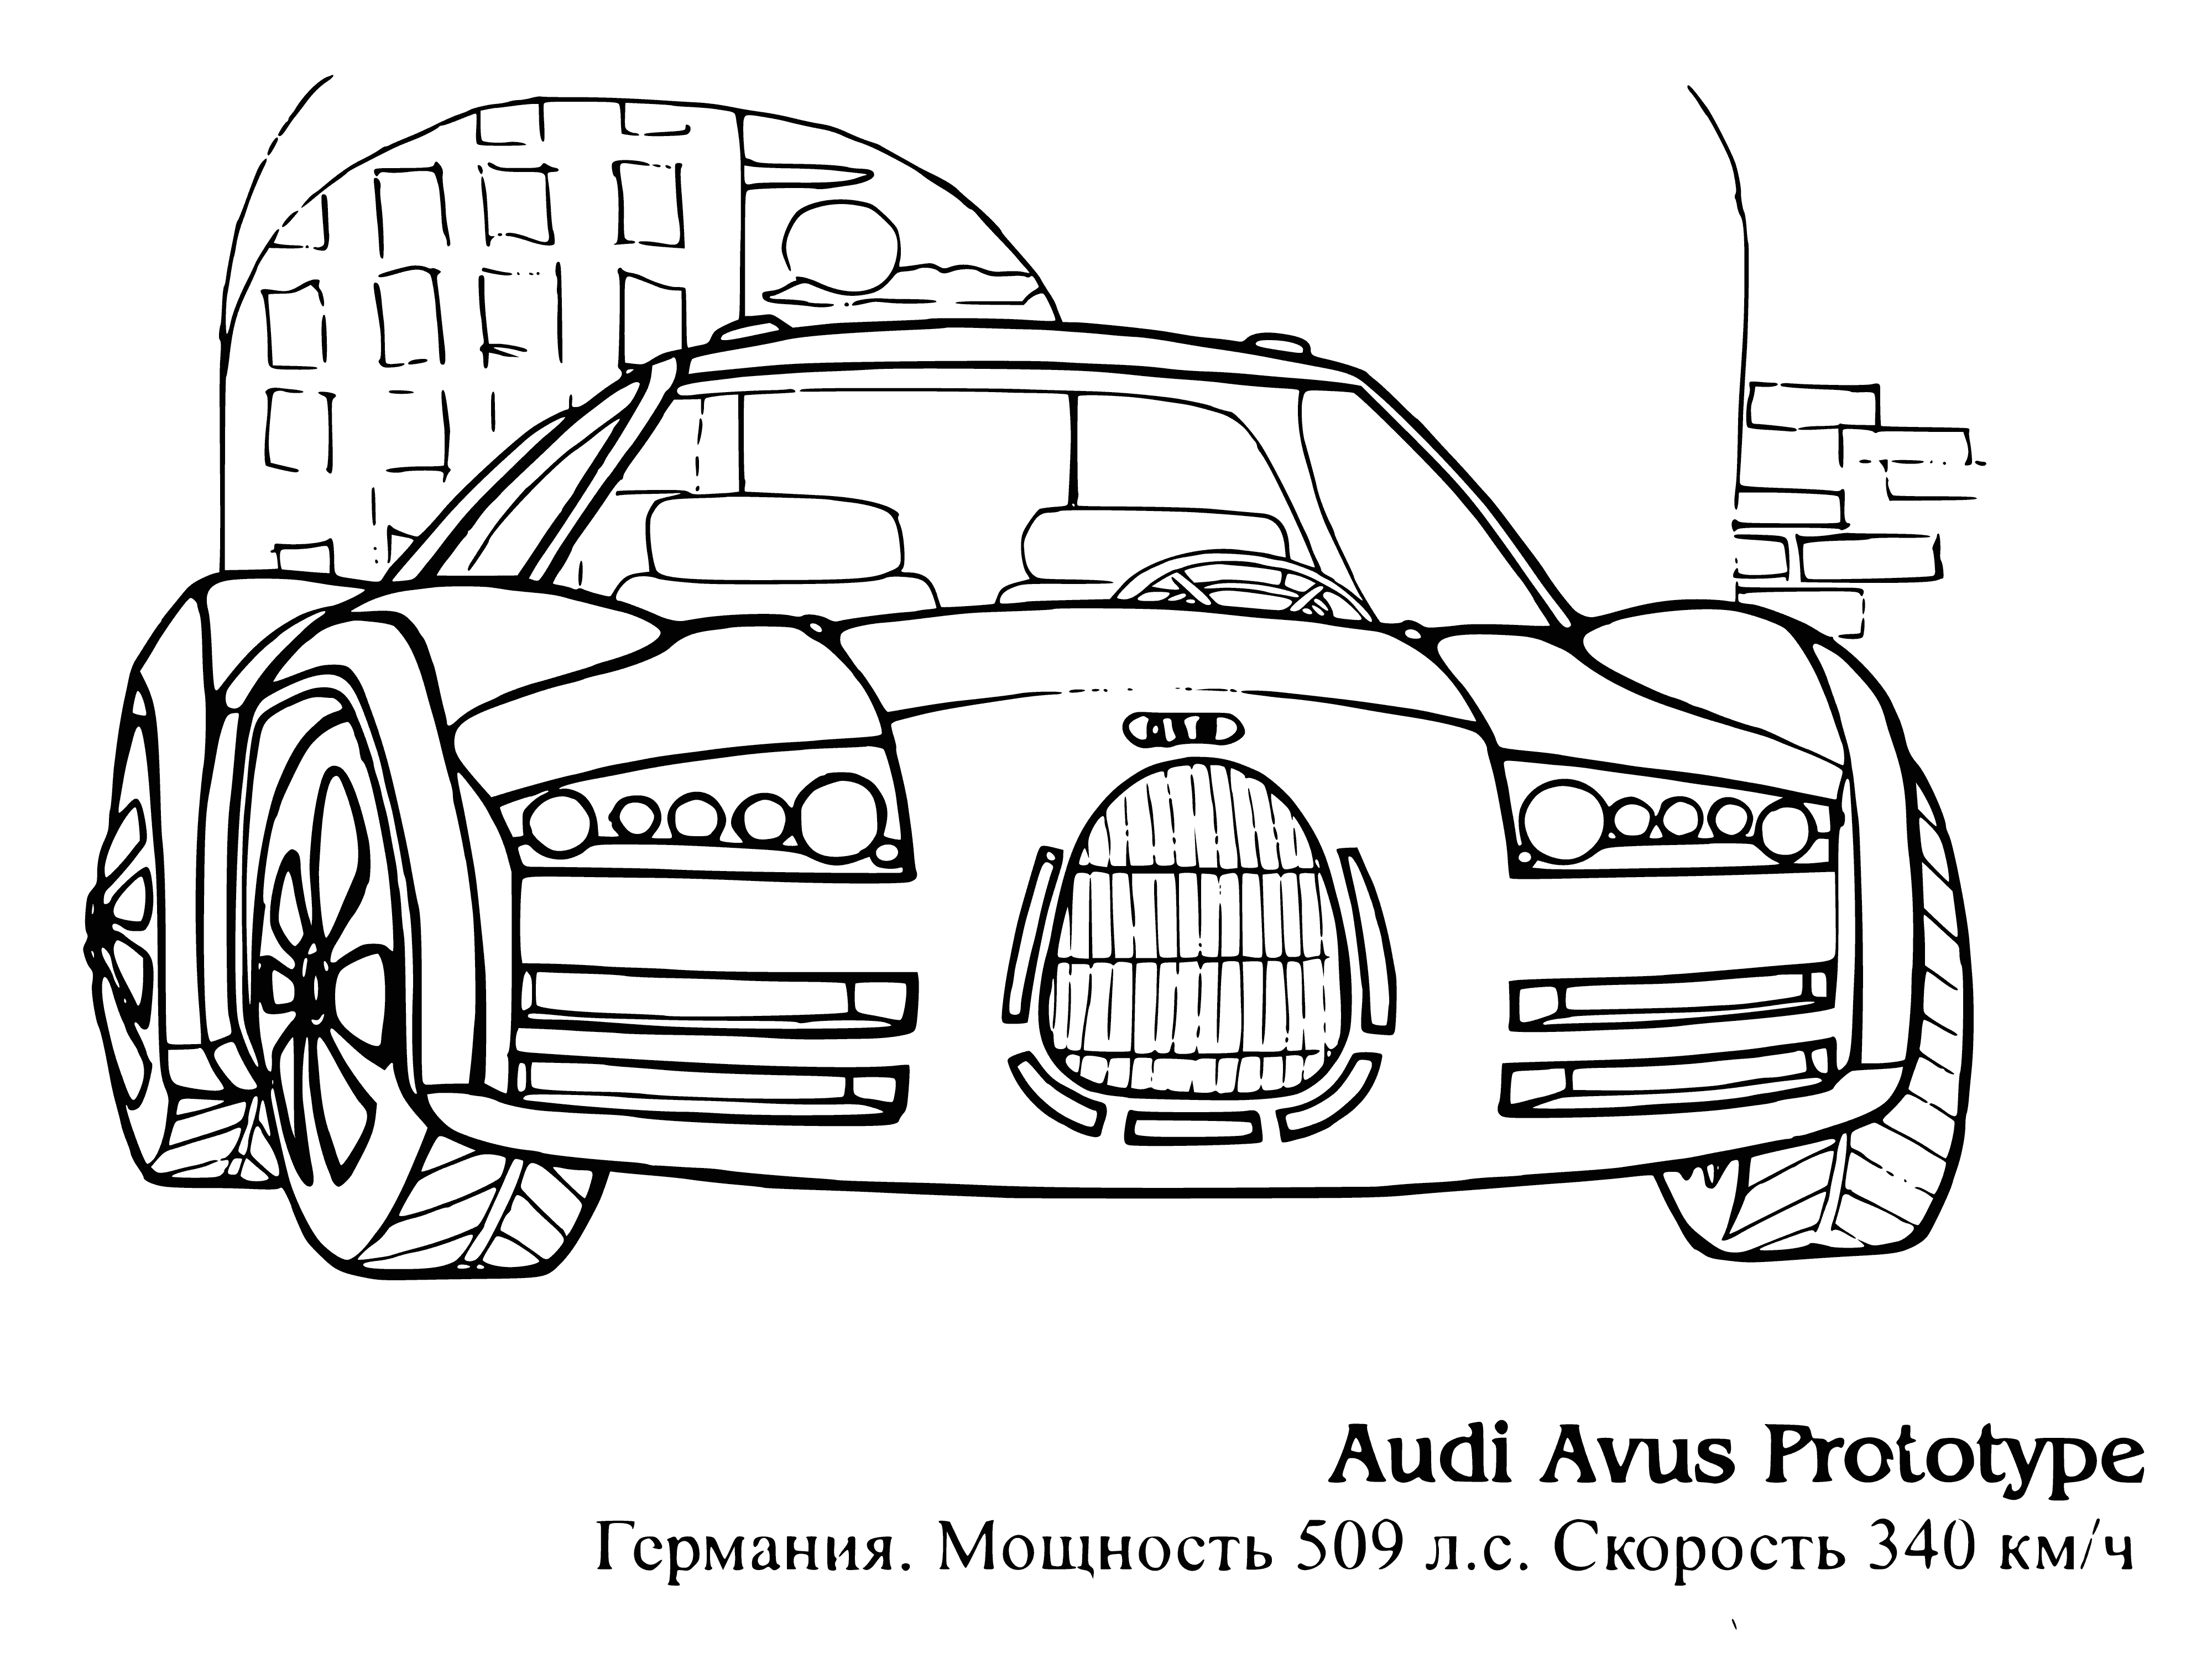 Audi prototype grand-père coloriage